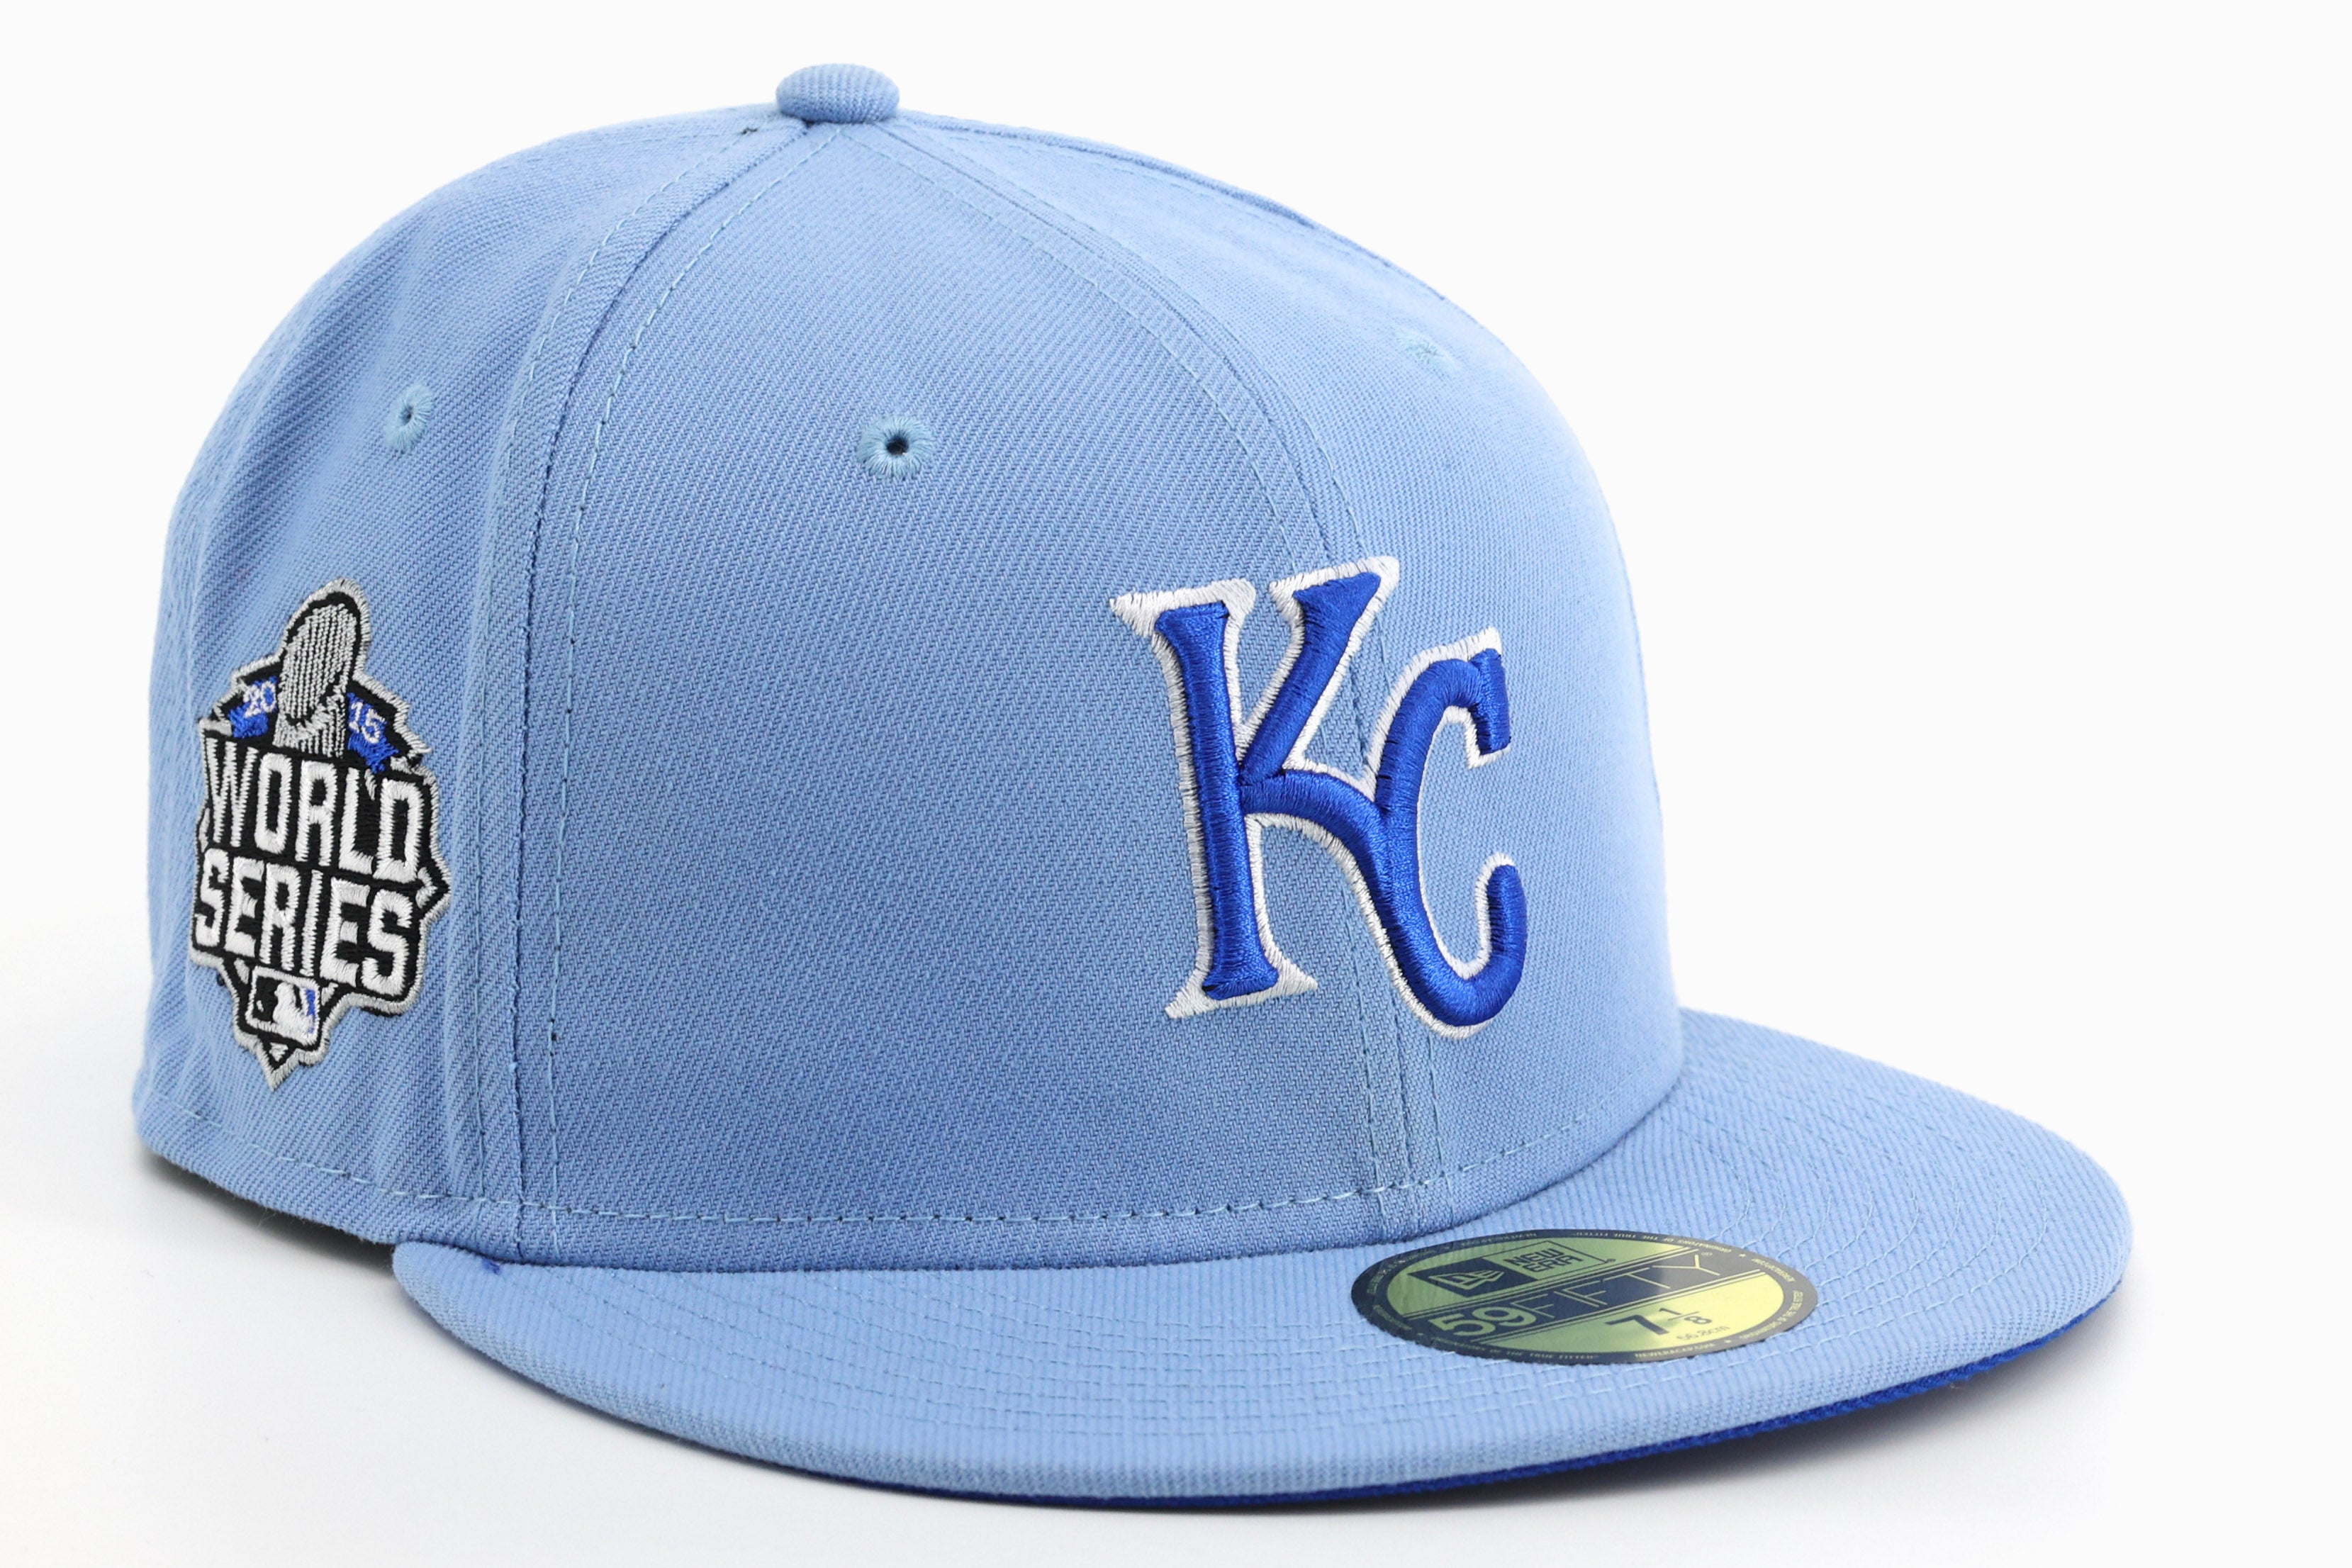 Kansas City Royals (Light Blue) Fitted